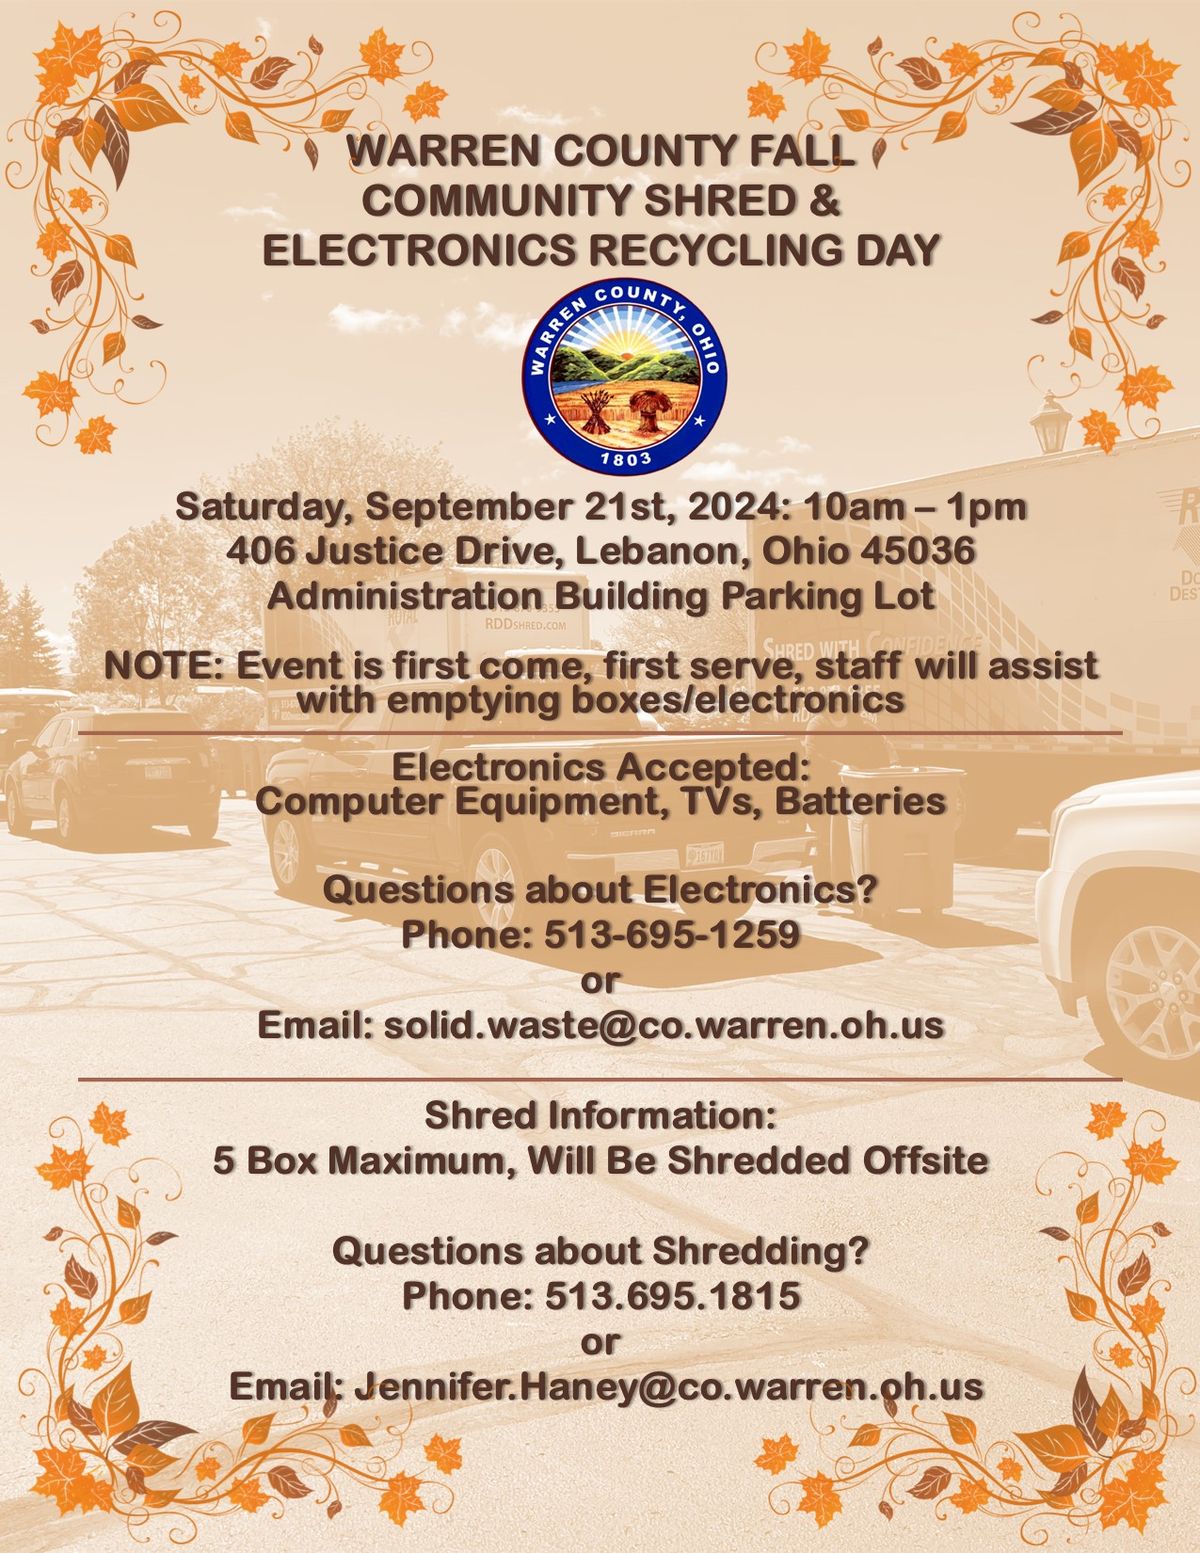 Warren County Fall Community Shred & Electronics Recycling Day